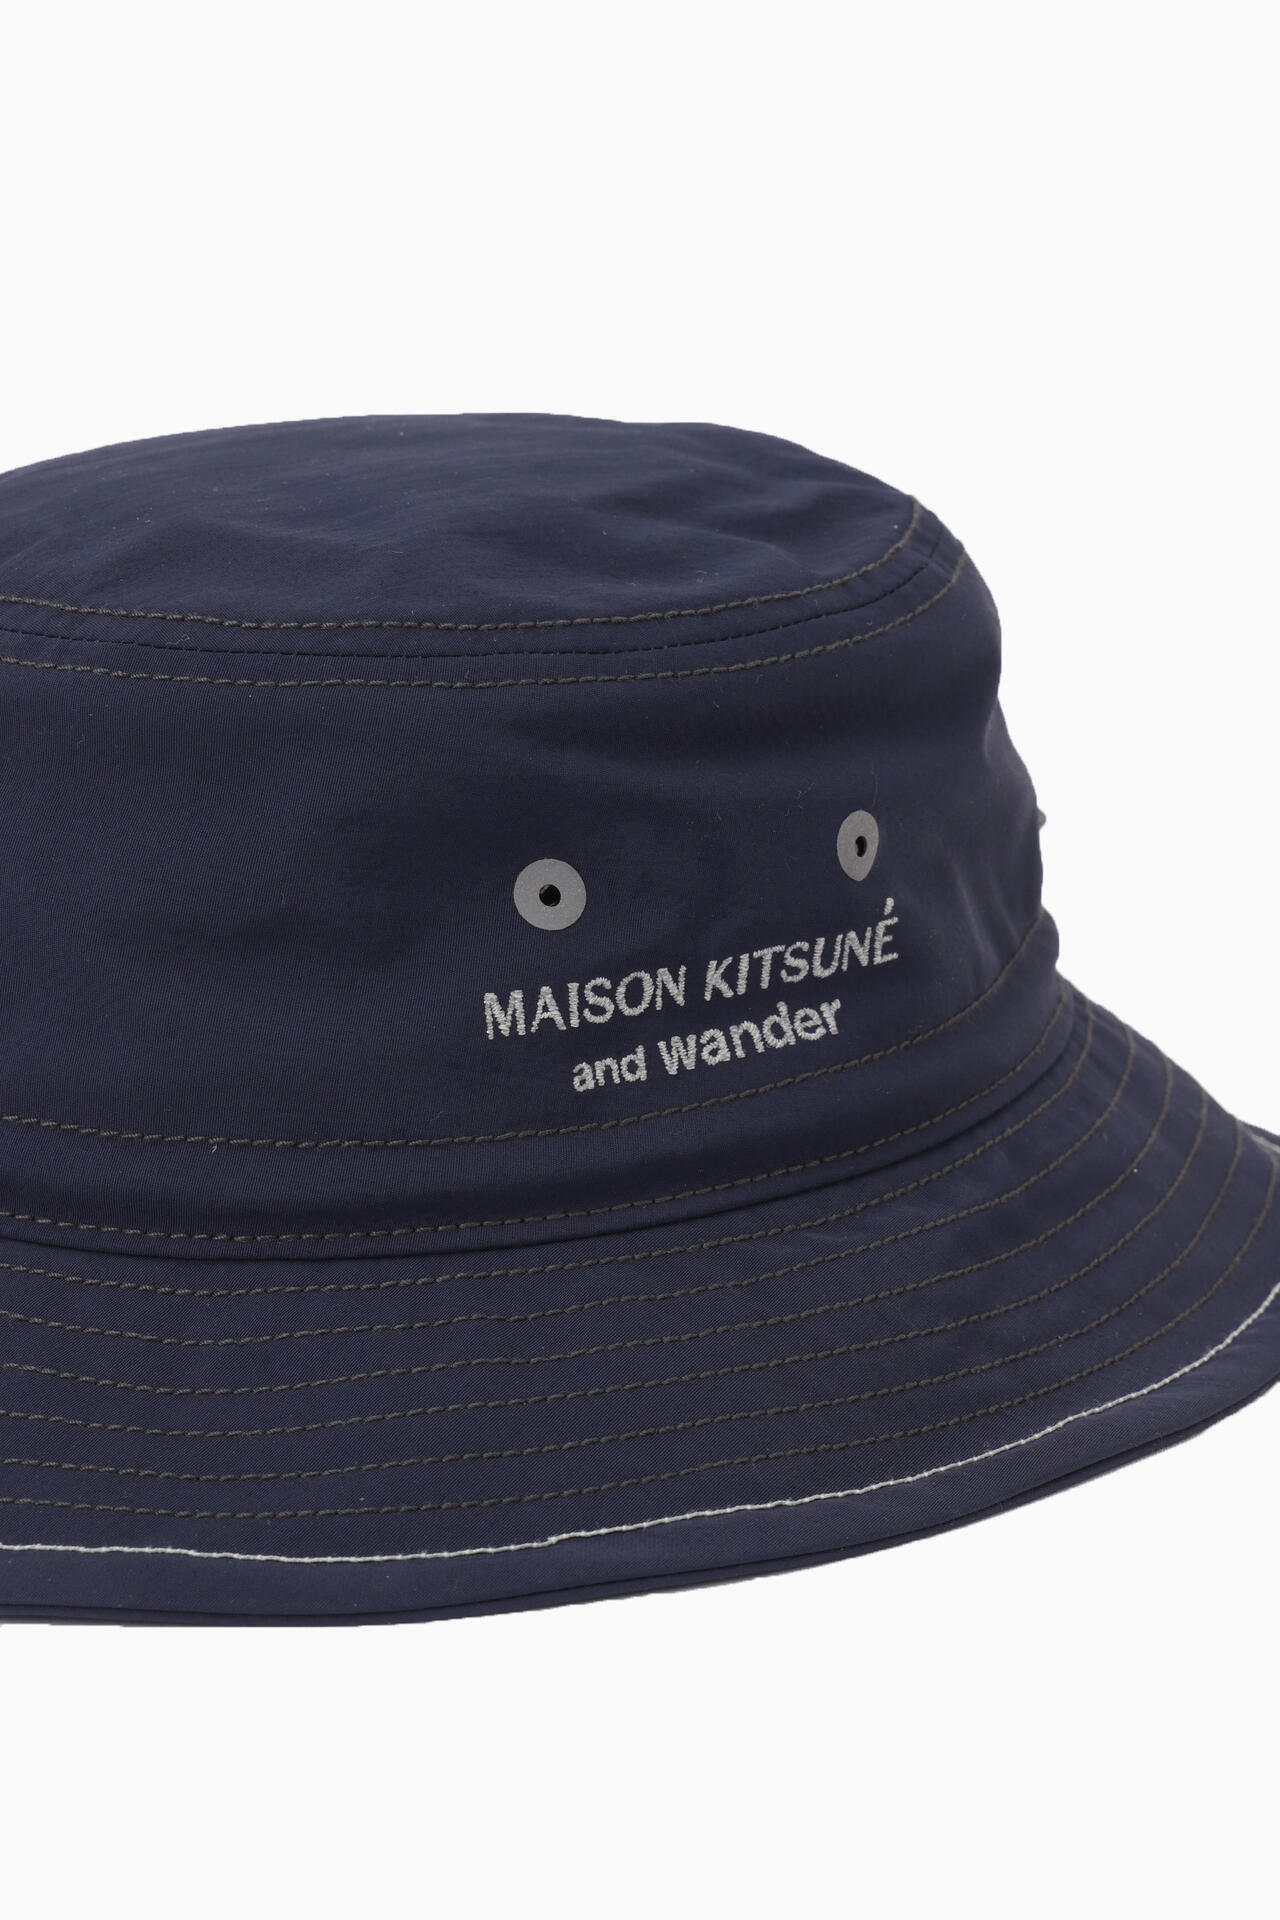 MAISON KITSUNÉ × and wander NYLON HAT | hats_caps | and wander 